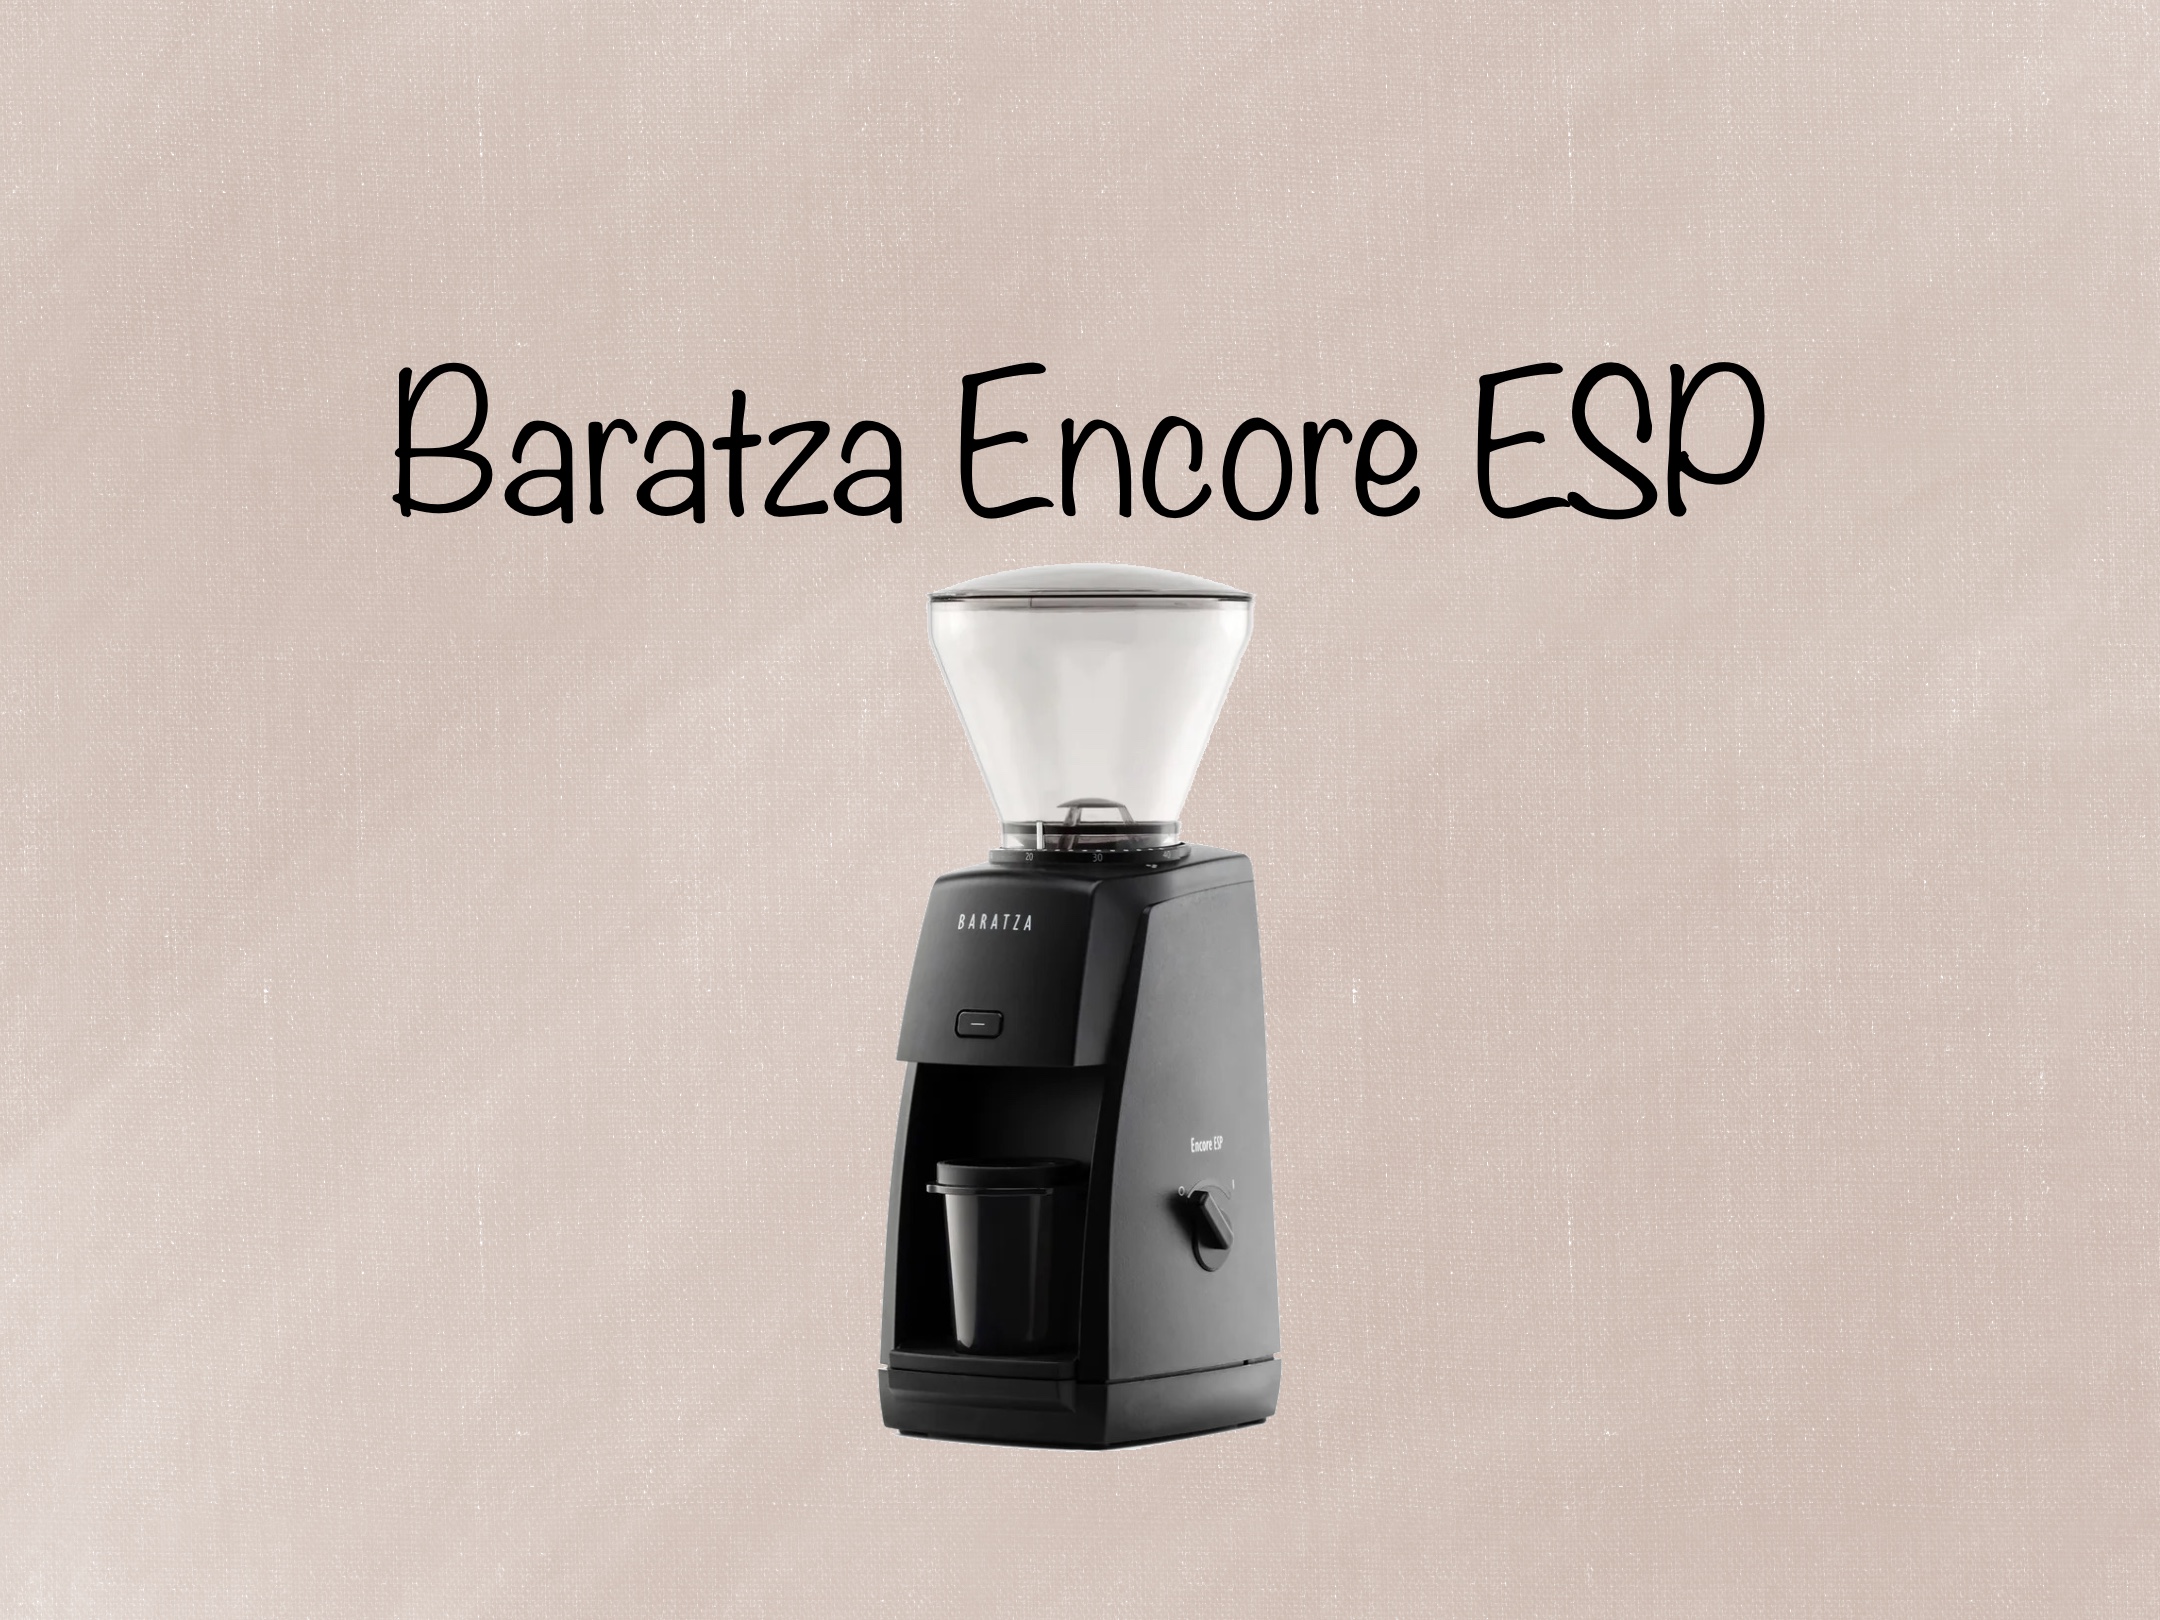 Baratza Encore ESP Espresso Grinder